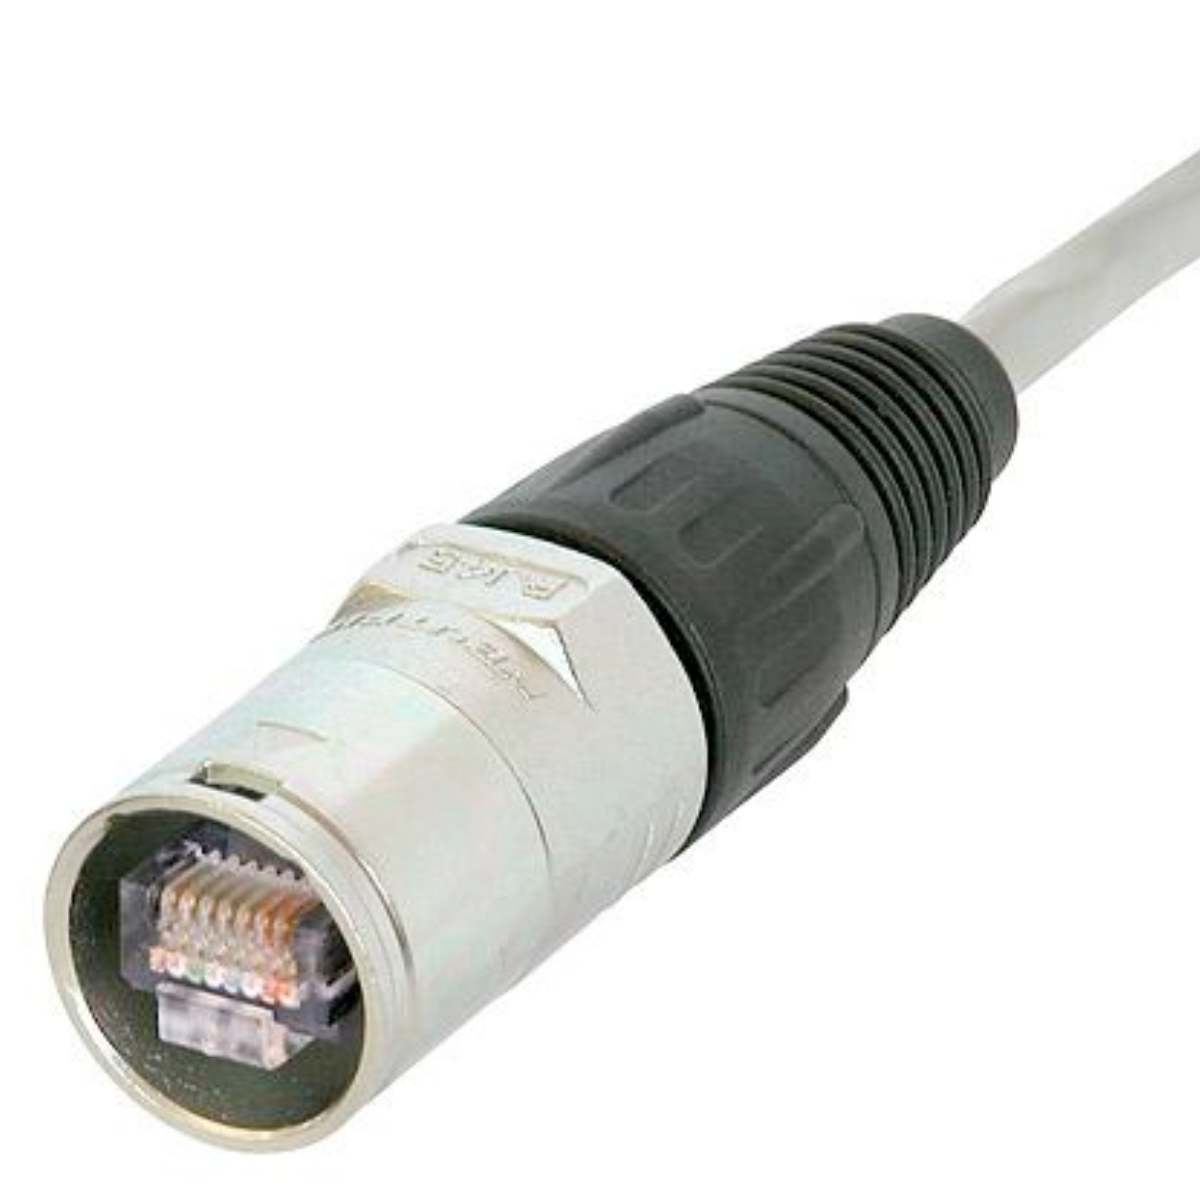 Neutrik NE8MC EtherCon Cable Connector